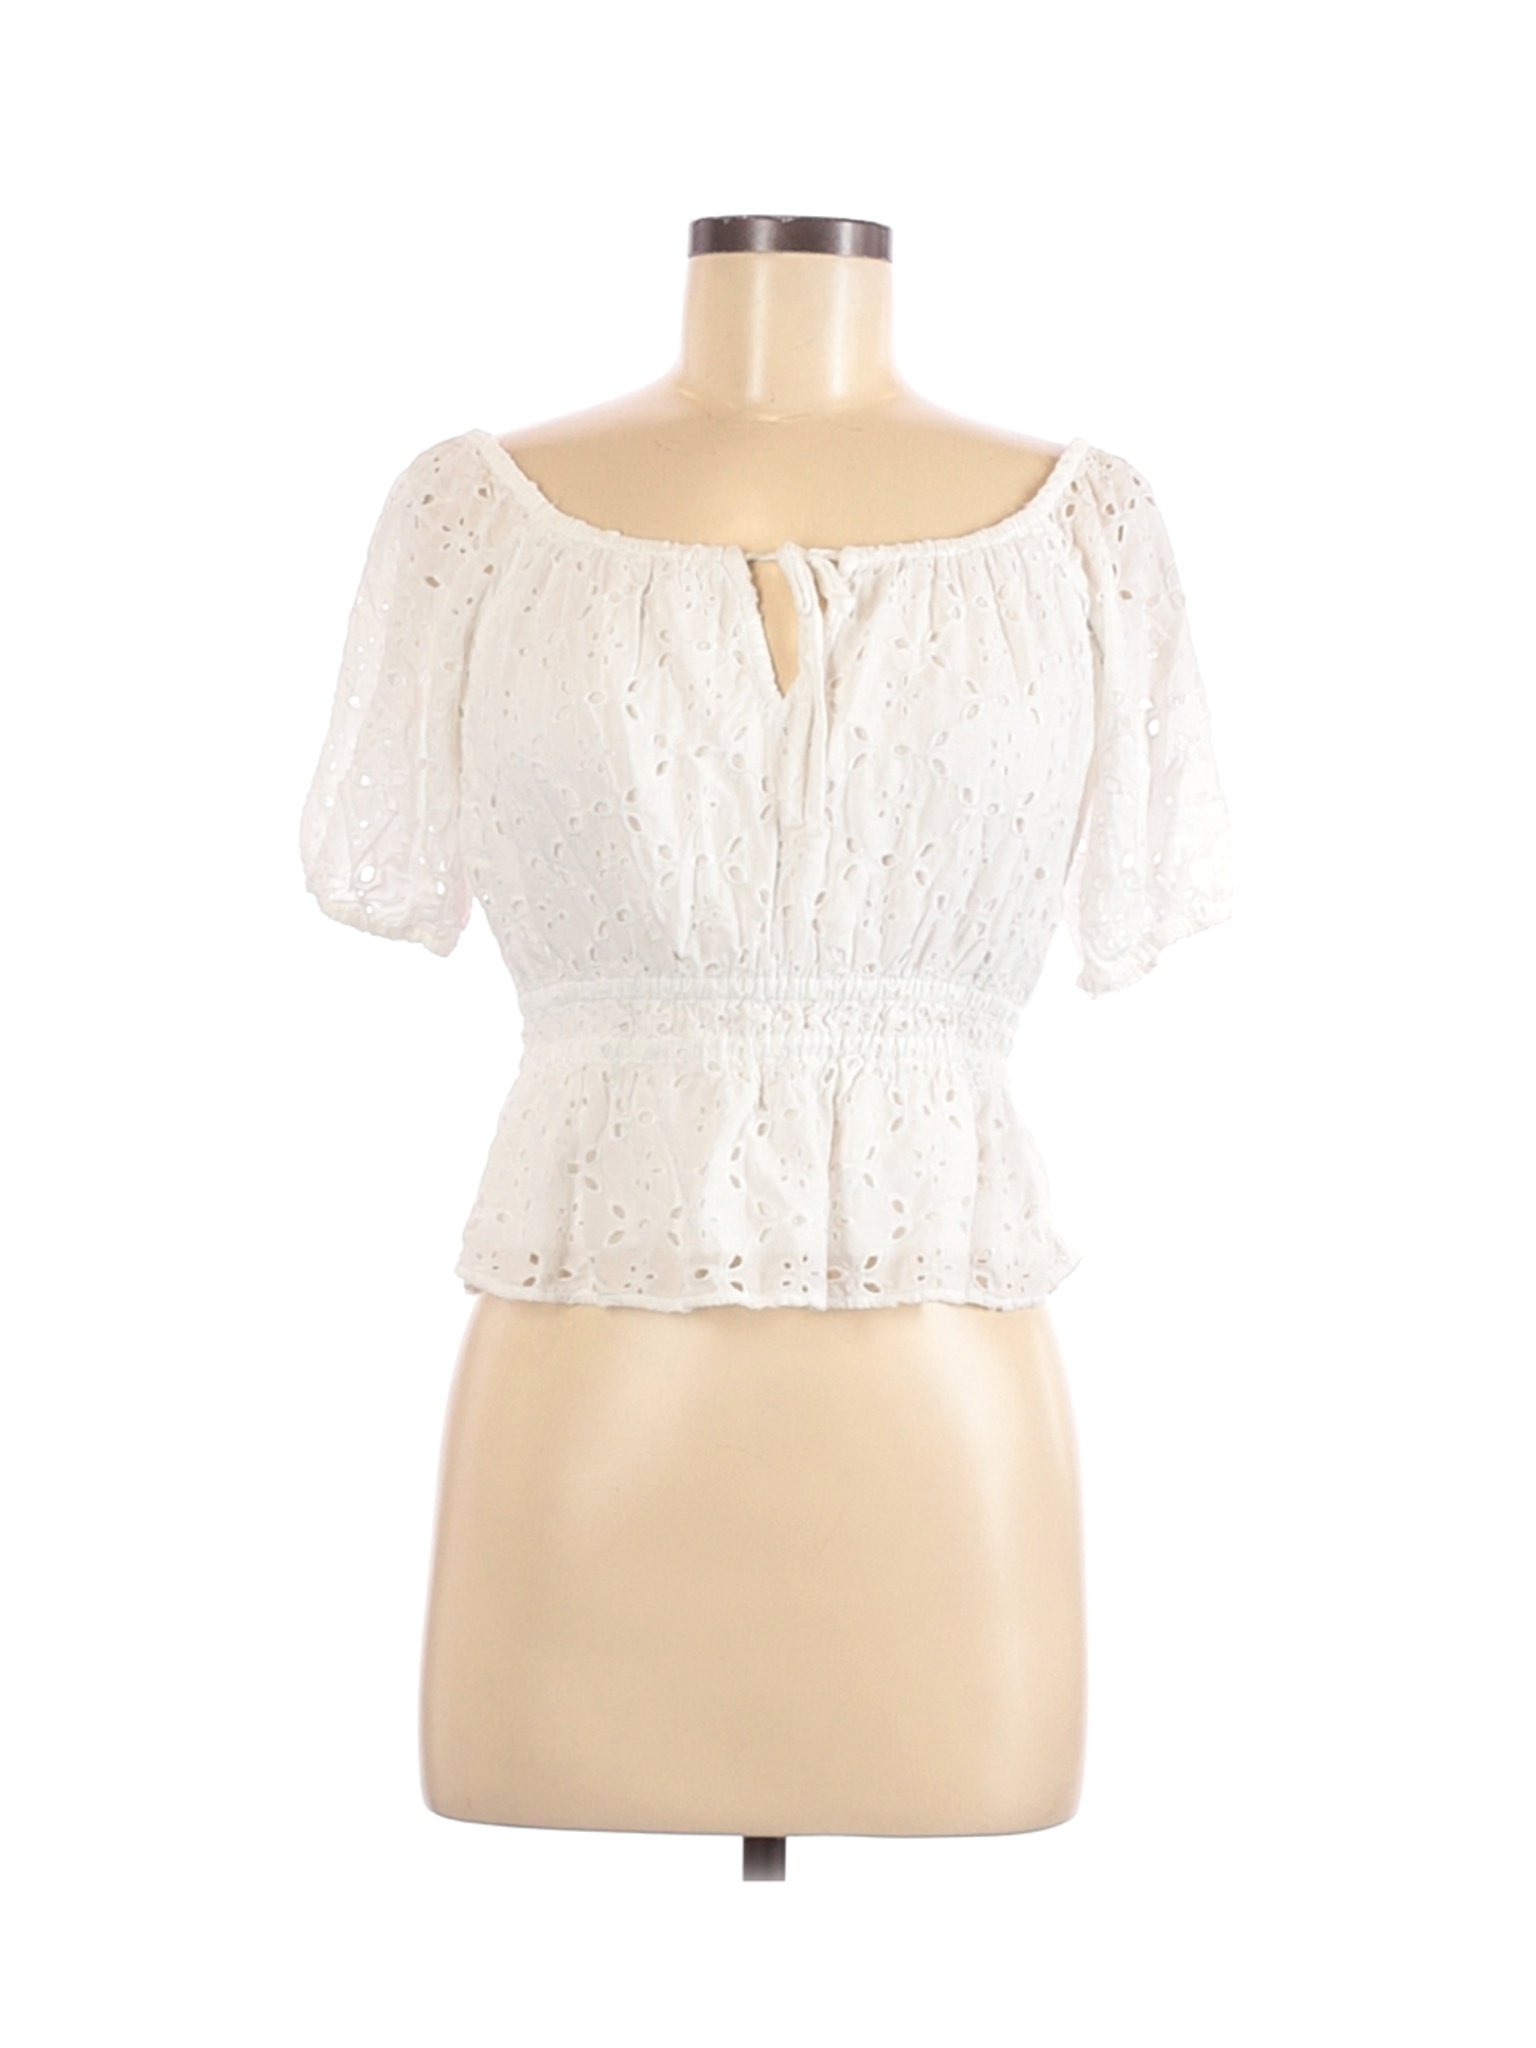 Abercrombie & Fitch Women White Short Sleeve Blouse M | eBay